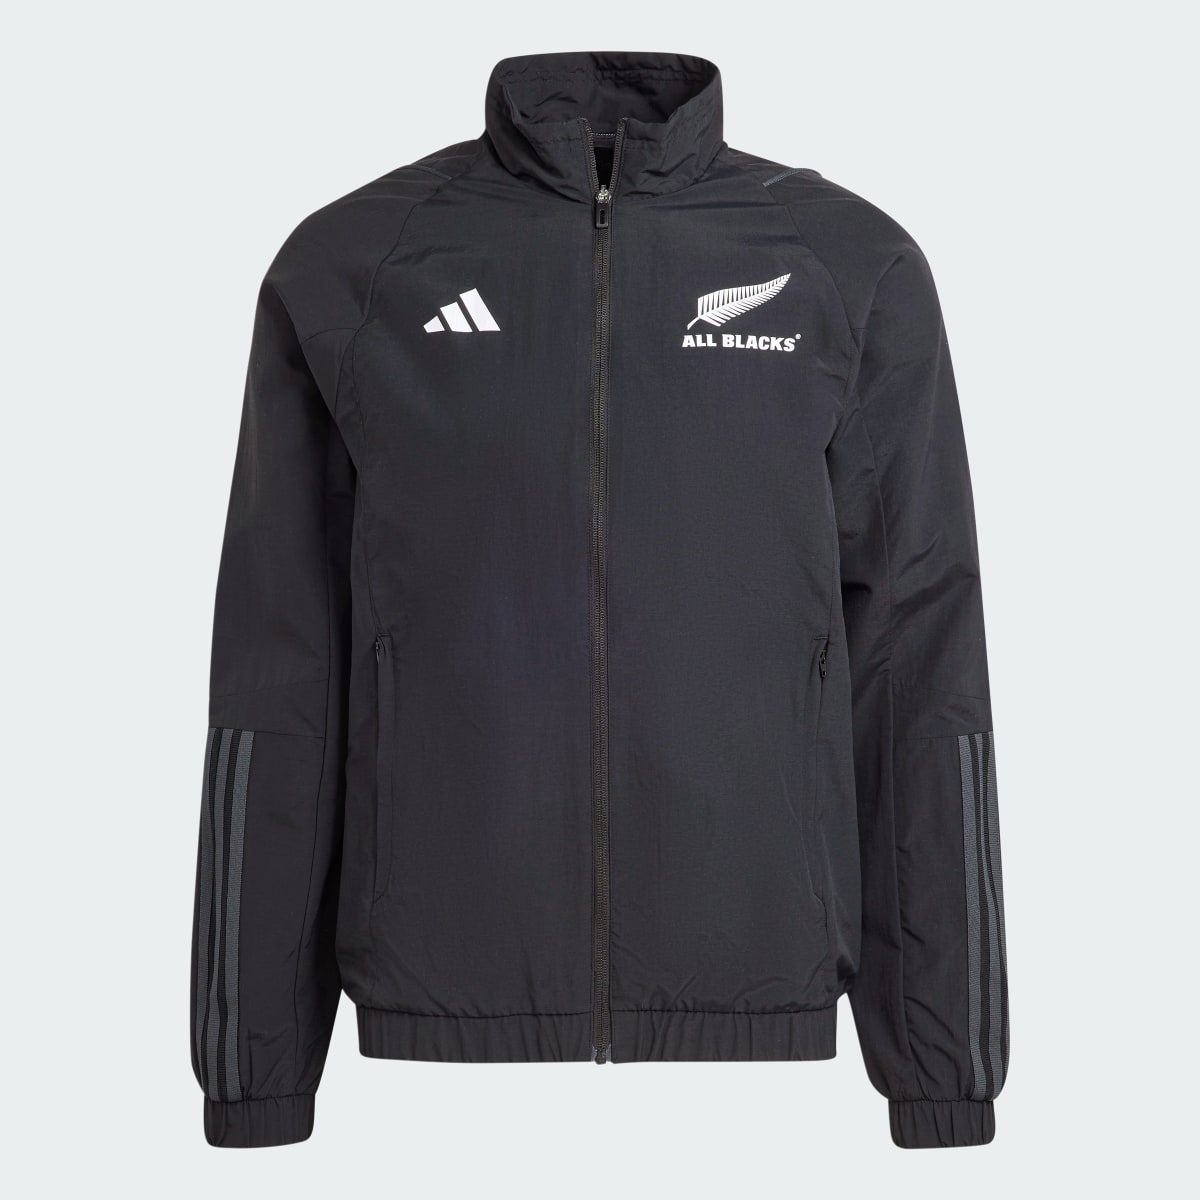 Adidas All Blacks Rugby Track Suit Jacket. 6